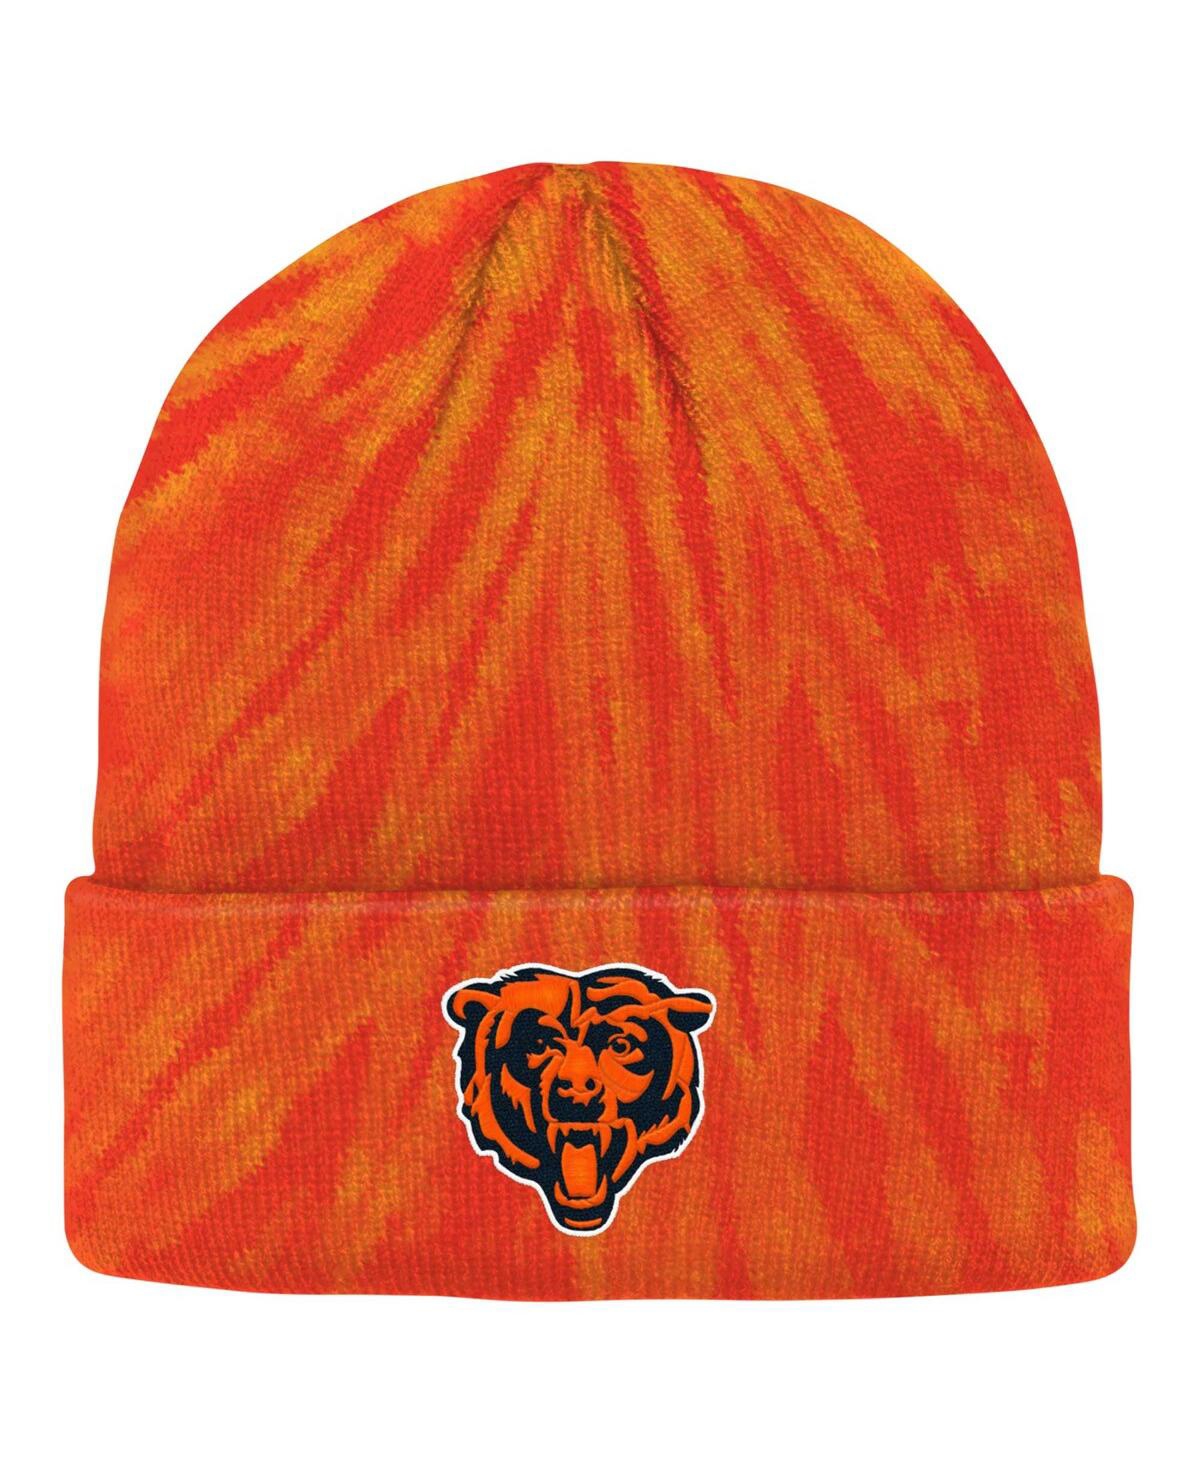 Outerstuff Kids' Big Boys And Girls Orange Chicago Bears Tie-dye Cuffed Knit Hat